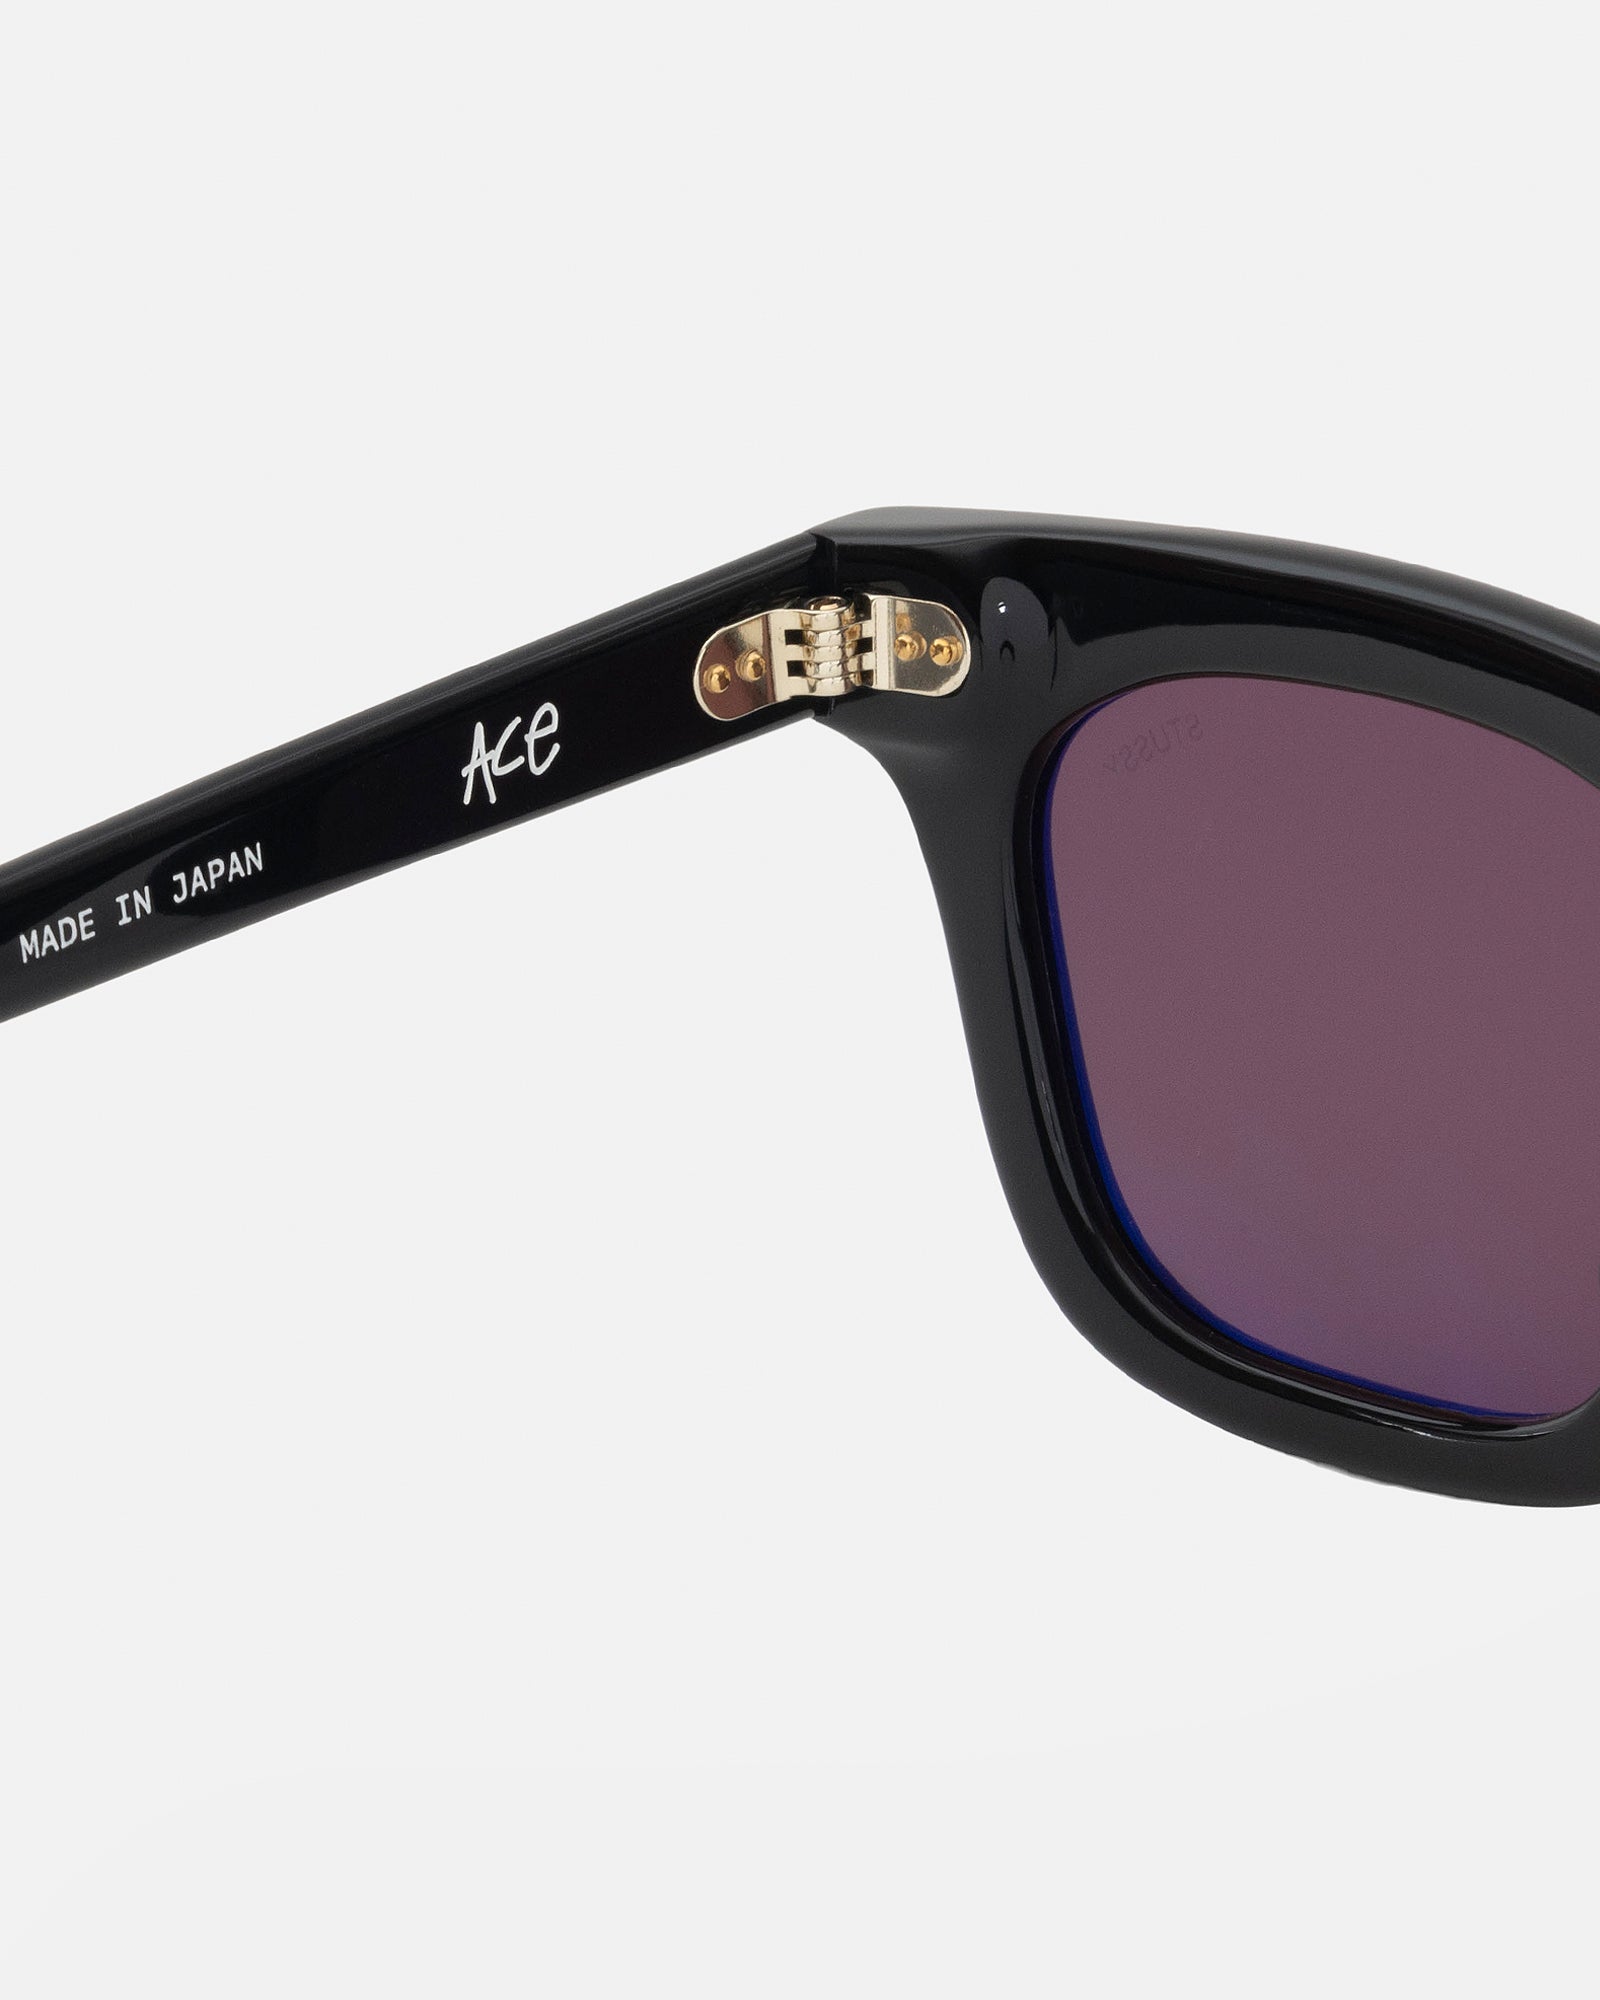 Stüssy Ace Sunglasses Black / Brown Lens Accessories